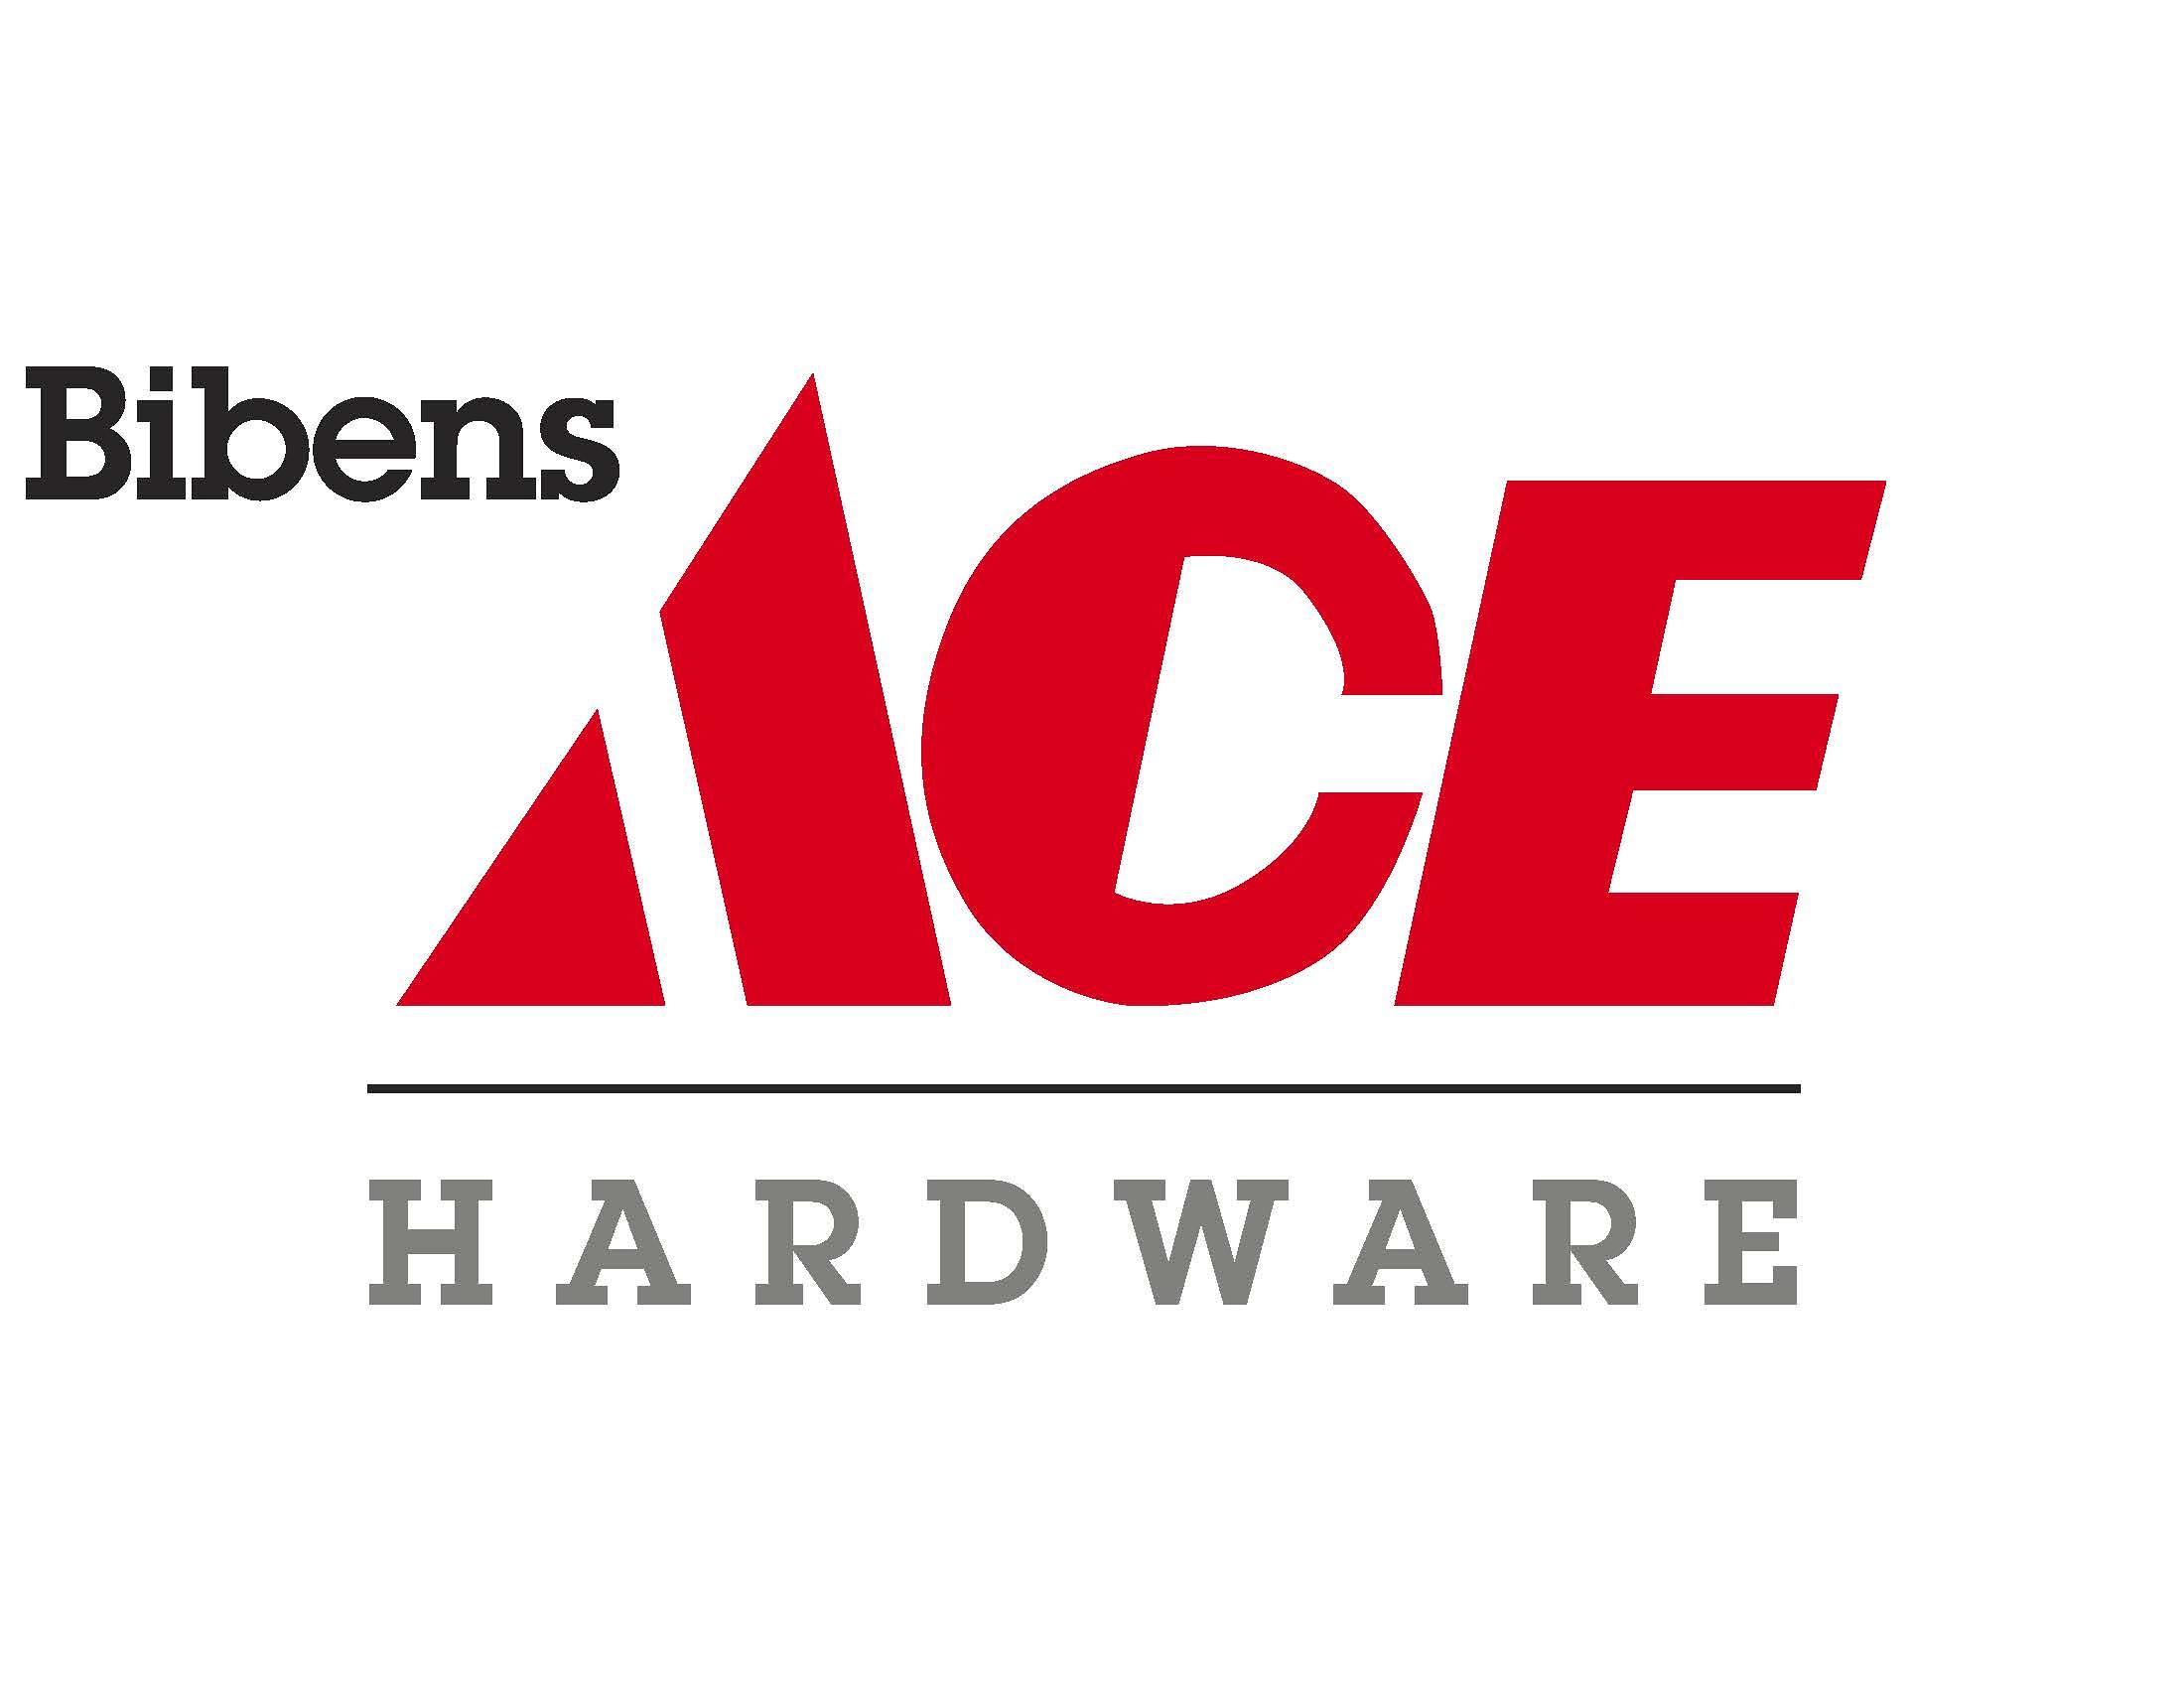 Carhartt Apparel – Bibens Ace Hardware